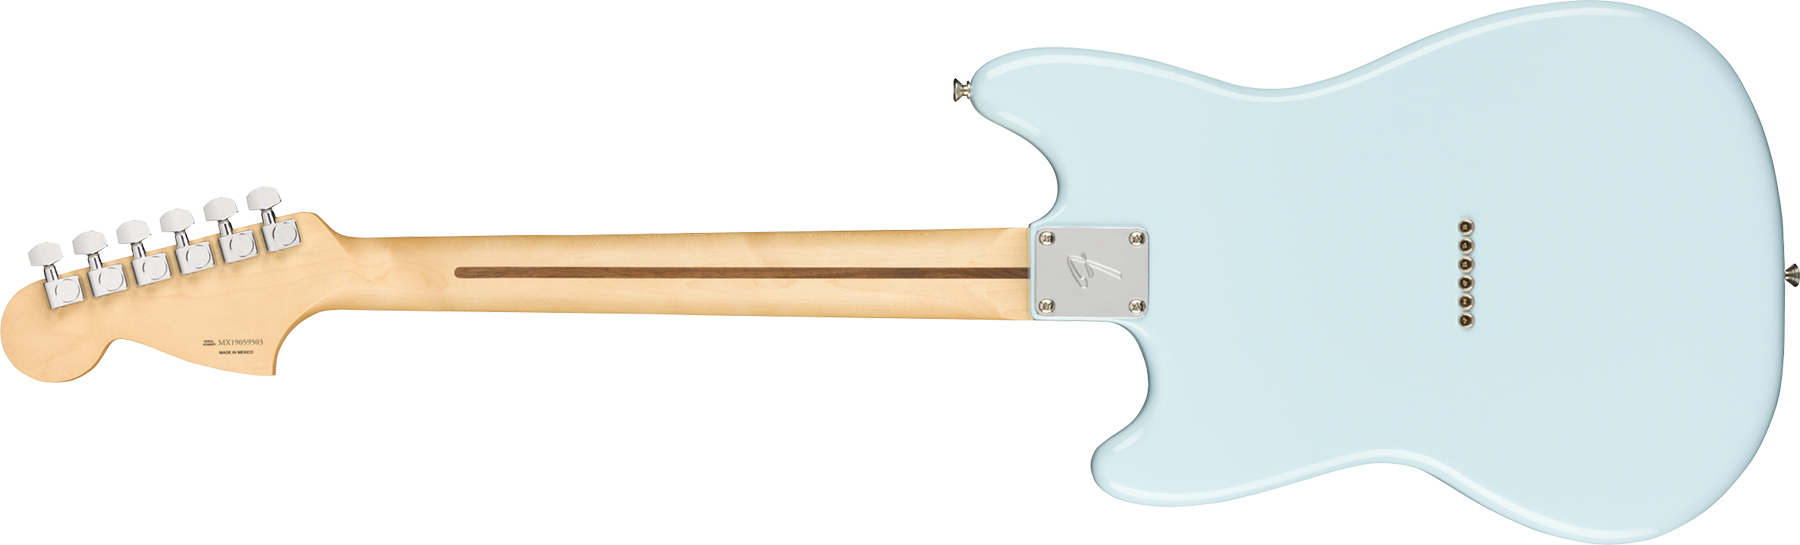 Fender Mustang Player Mex Ht Ss Mn - Surf Blue - Guitarra electrica retro rock - Variation 1